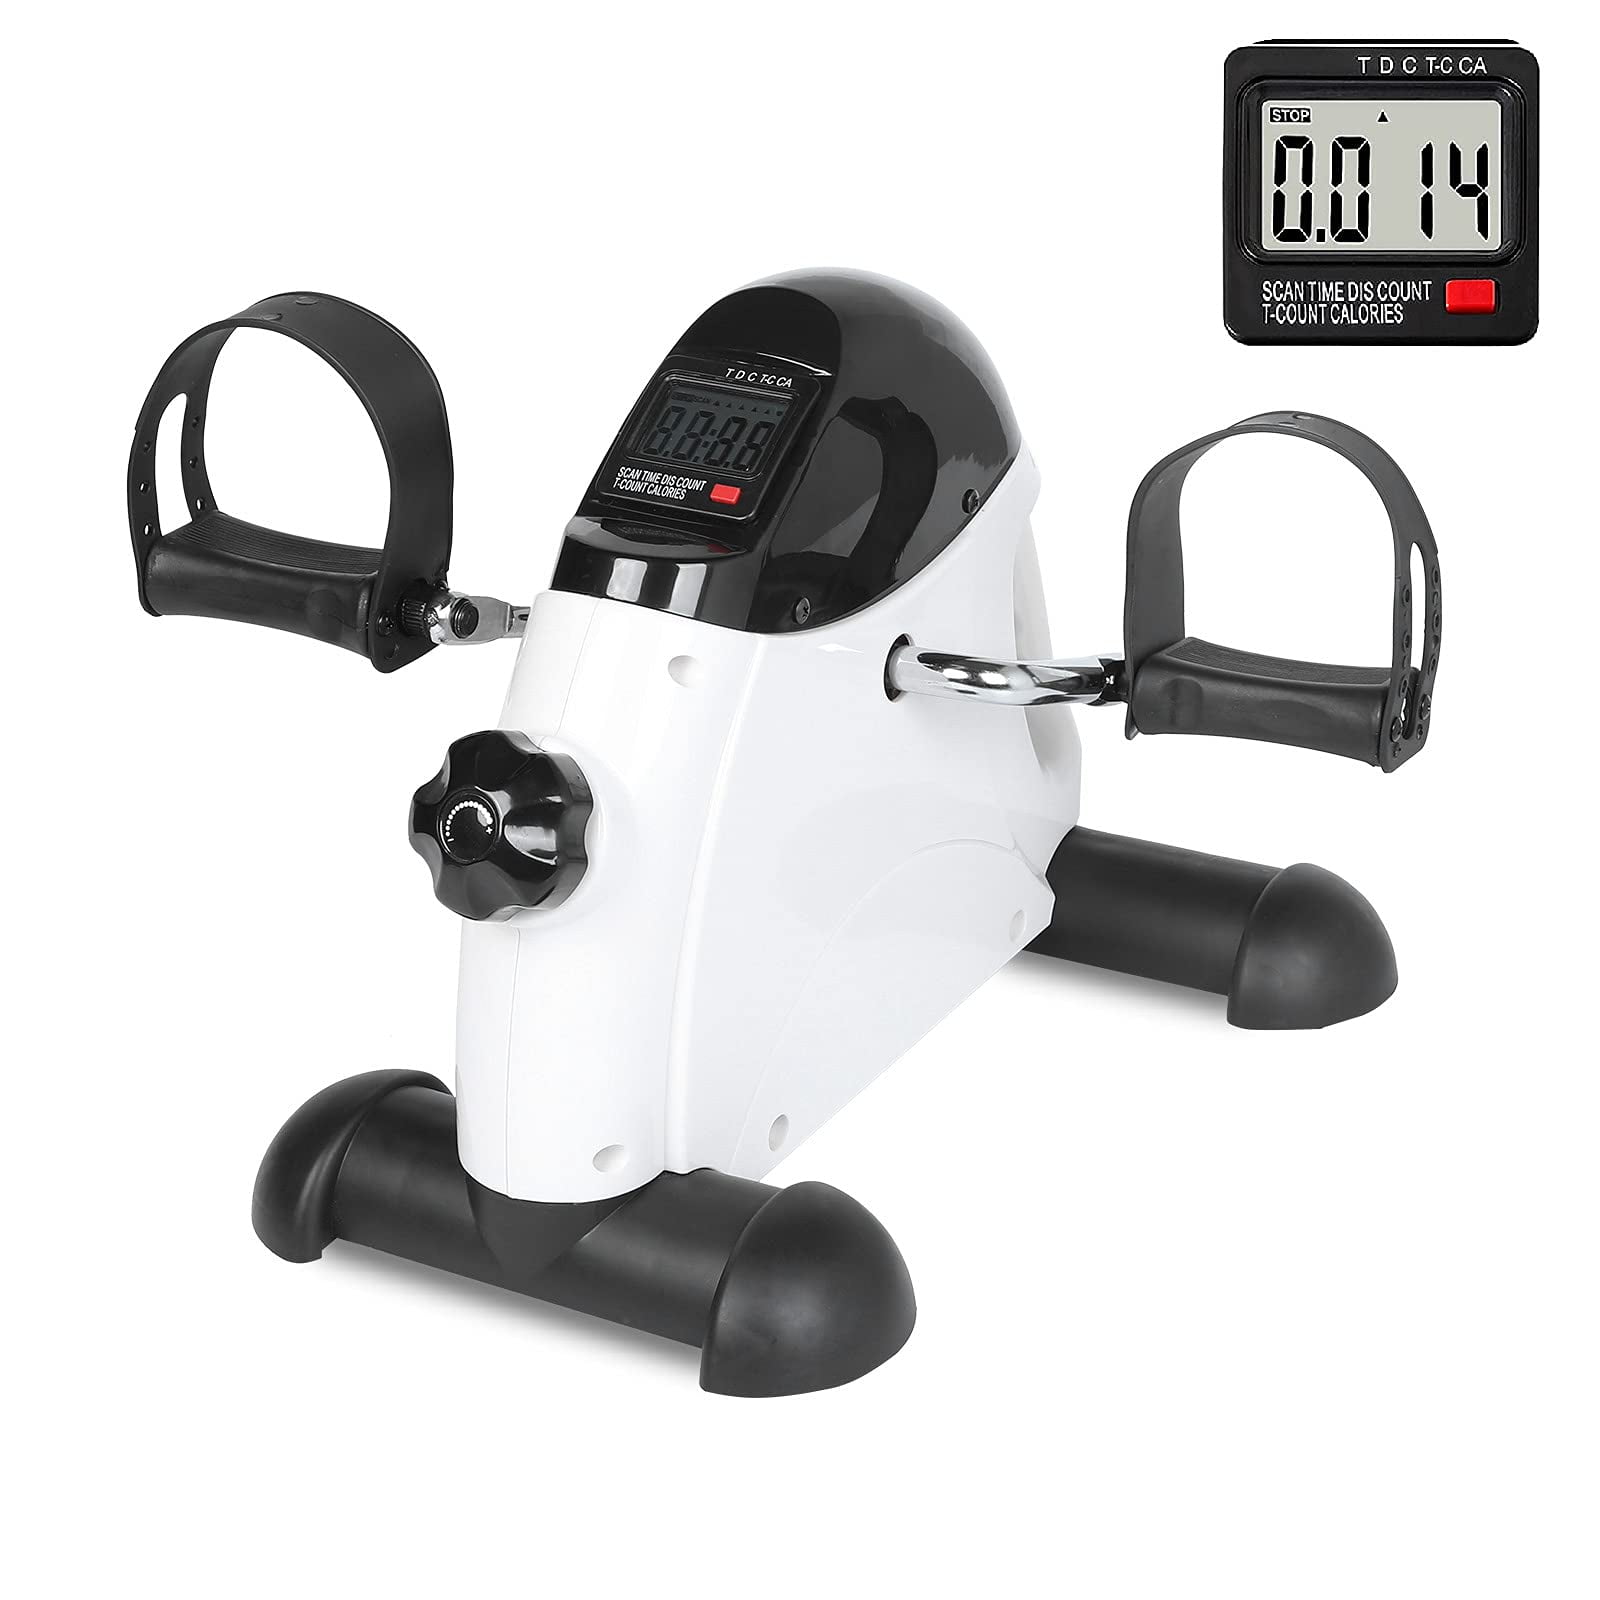 Adjustable LCD Display Pedal Exerciser Under Desk Bike Mini Cycling Peddler for Seniors Elderly Arms Legs Training Home Office Workout 